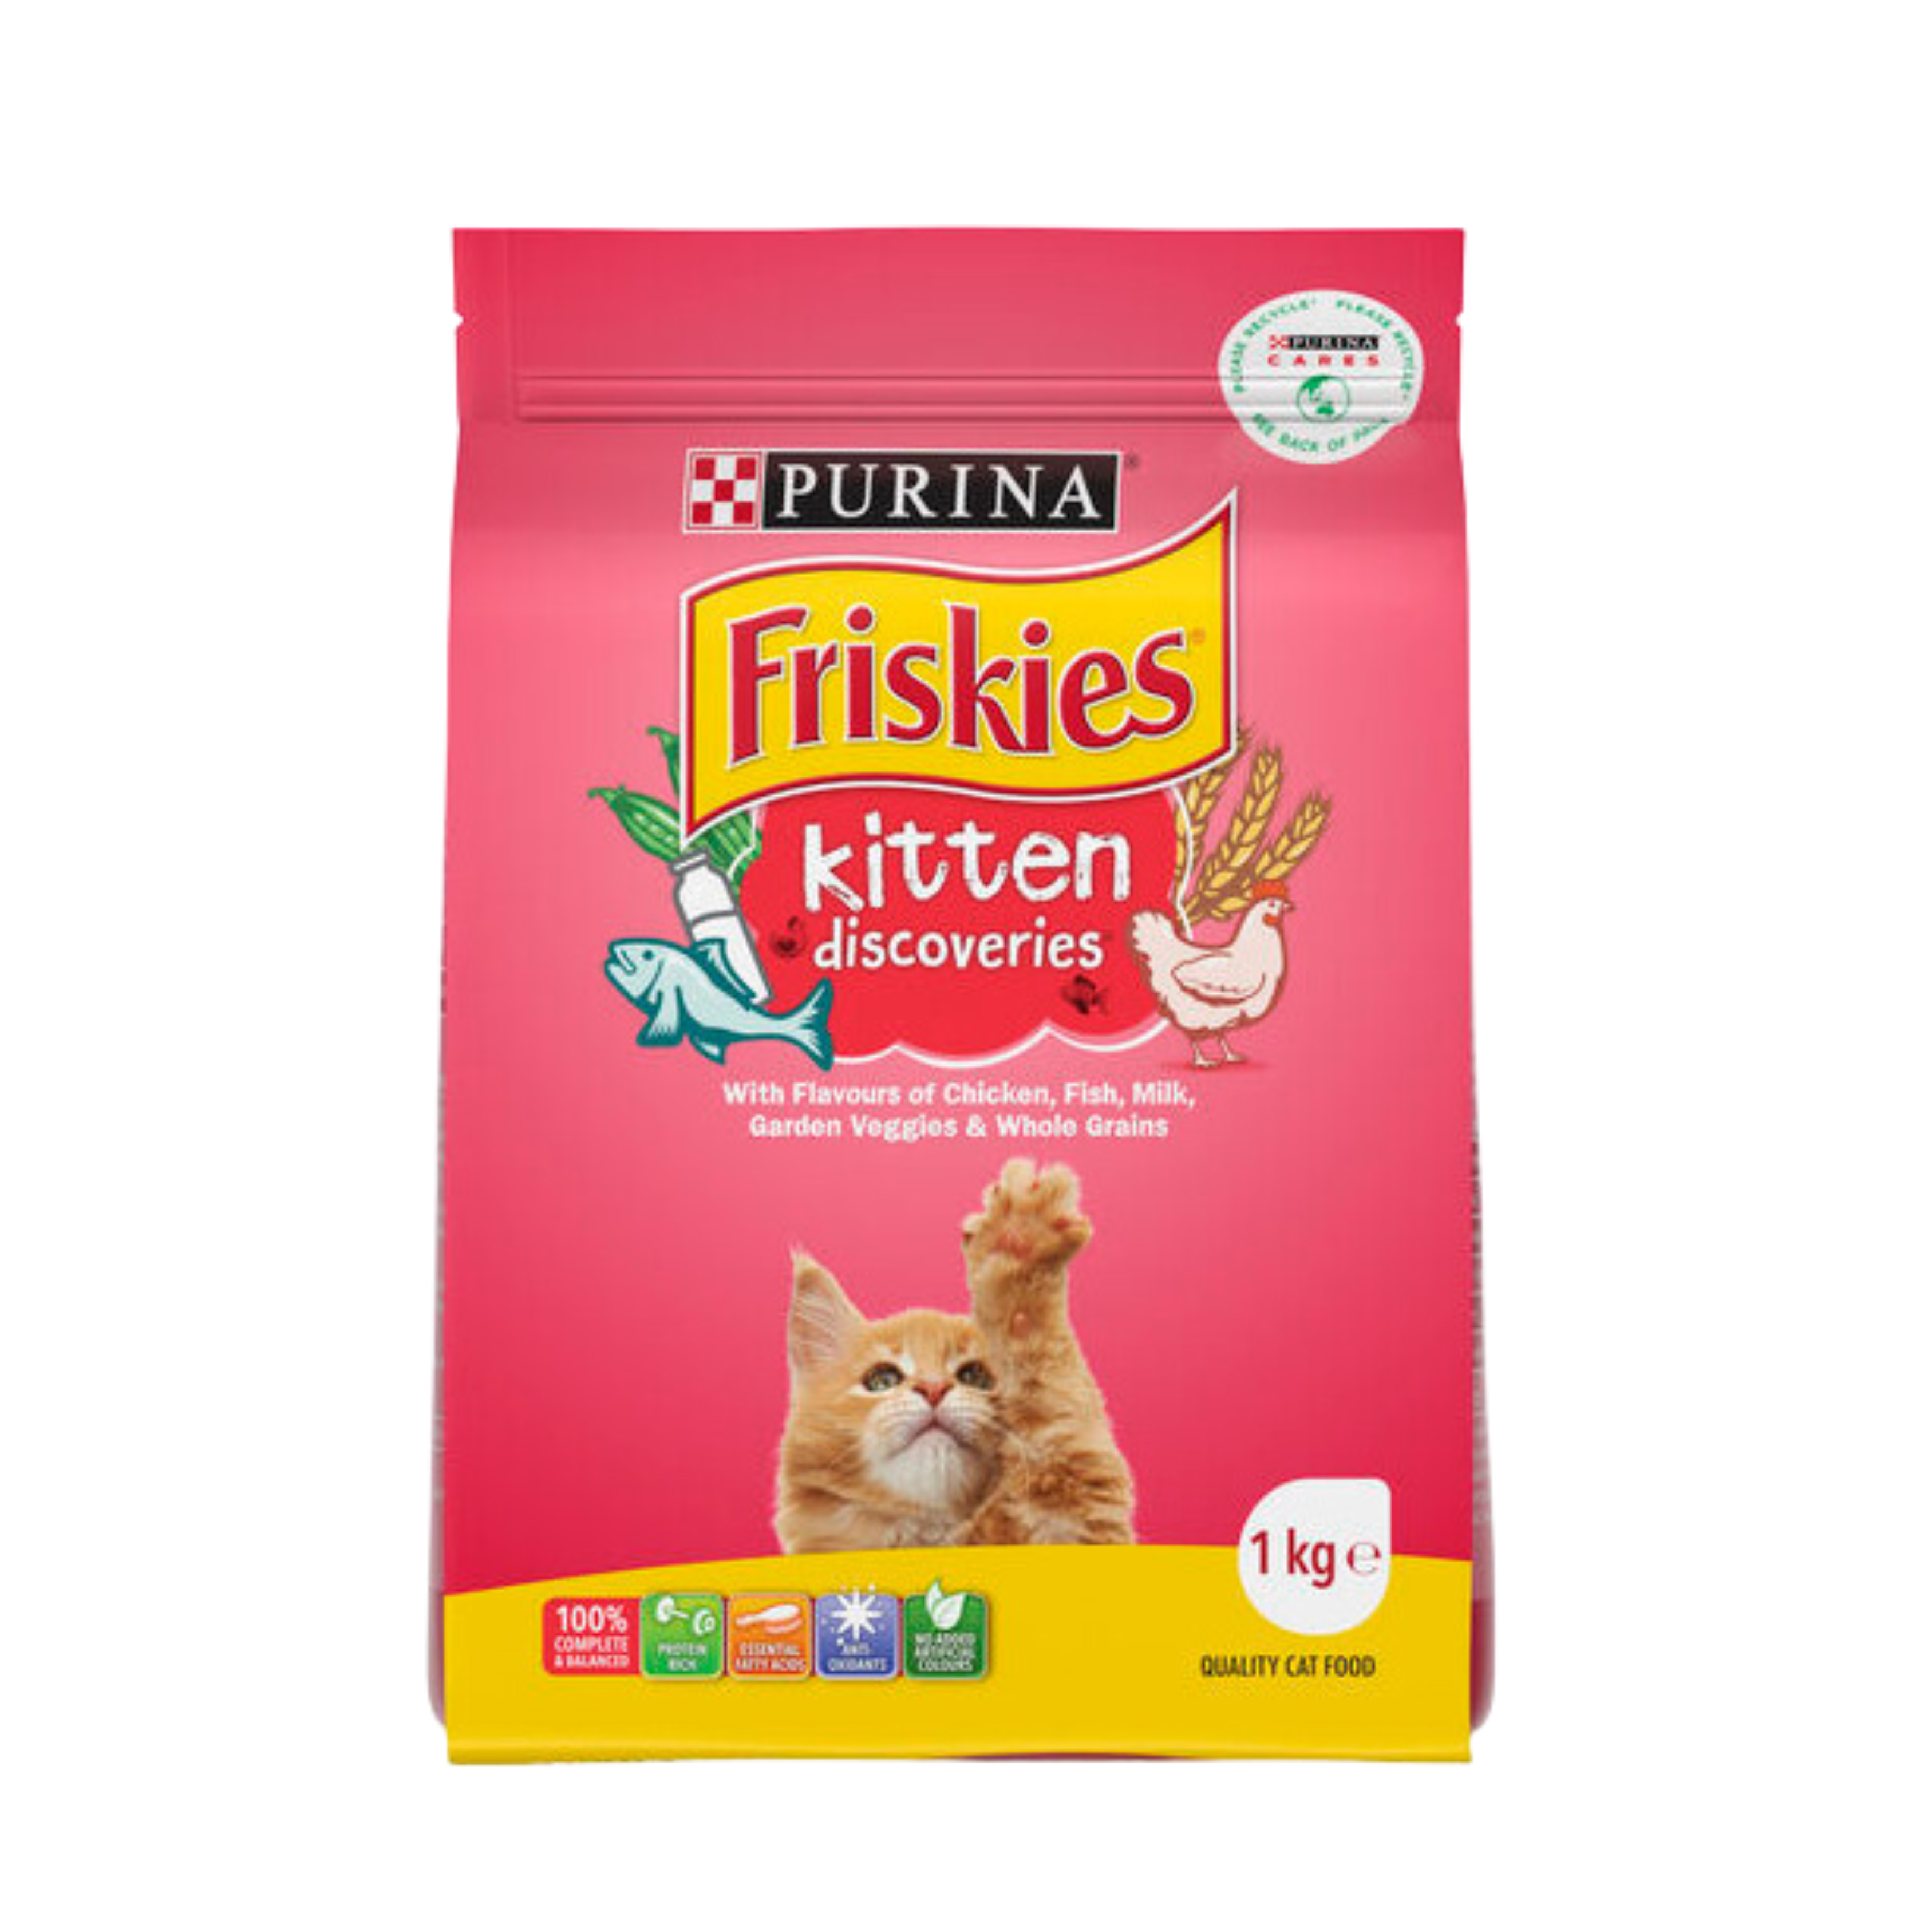 PURINA Friskies Kitten Discoveries 1kg